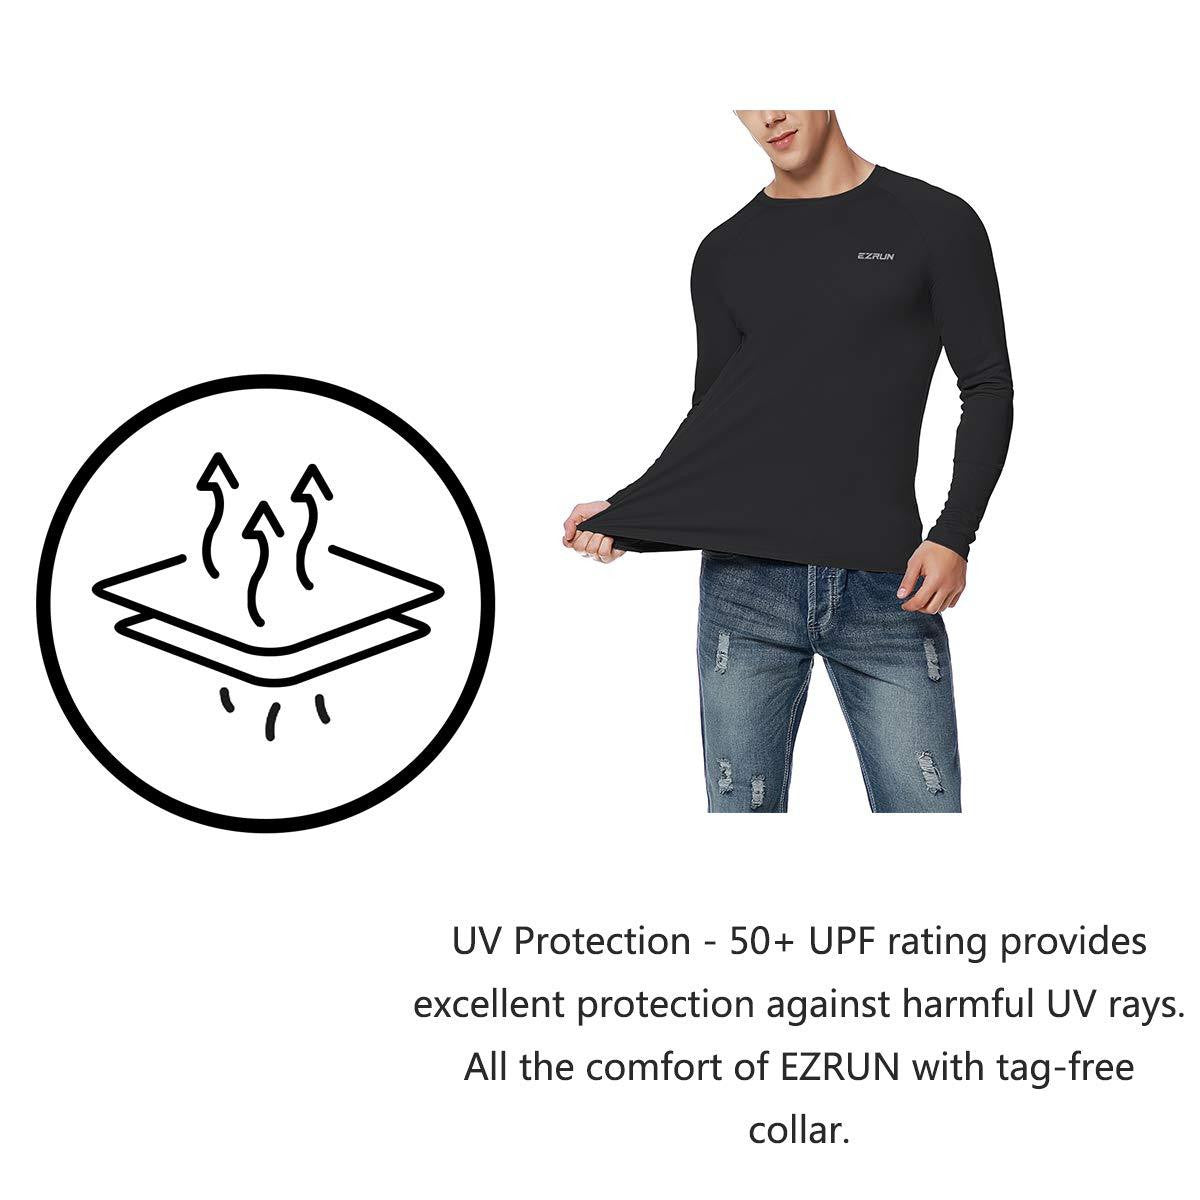 StunShow Fishing Shirt for Men Long Sleeve Sun Protection UPF 50+